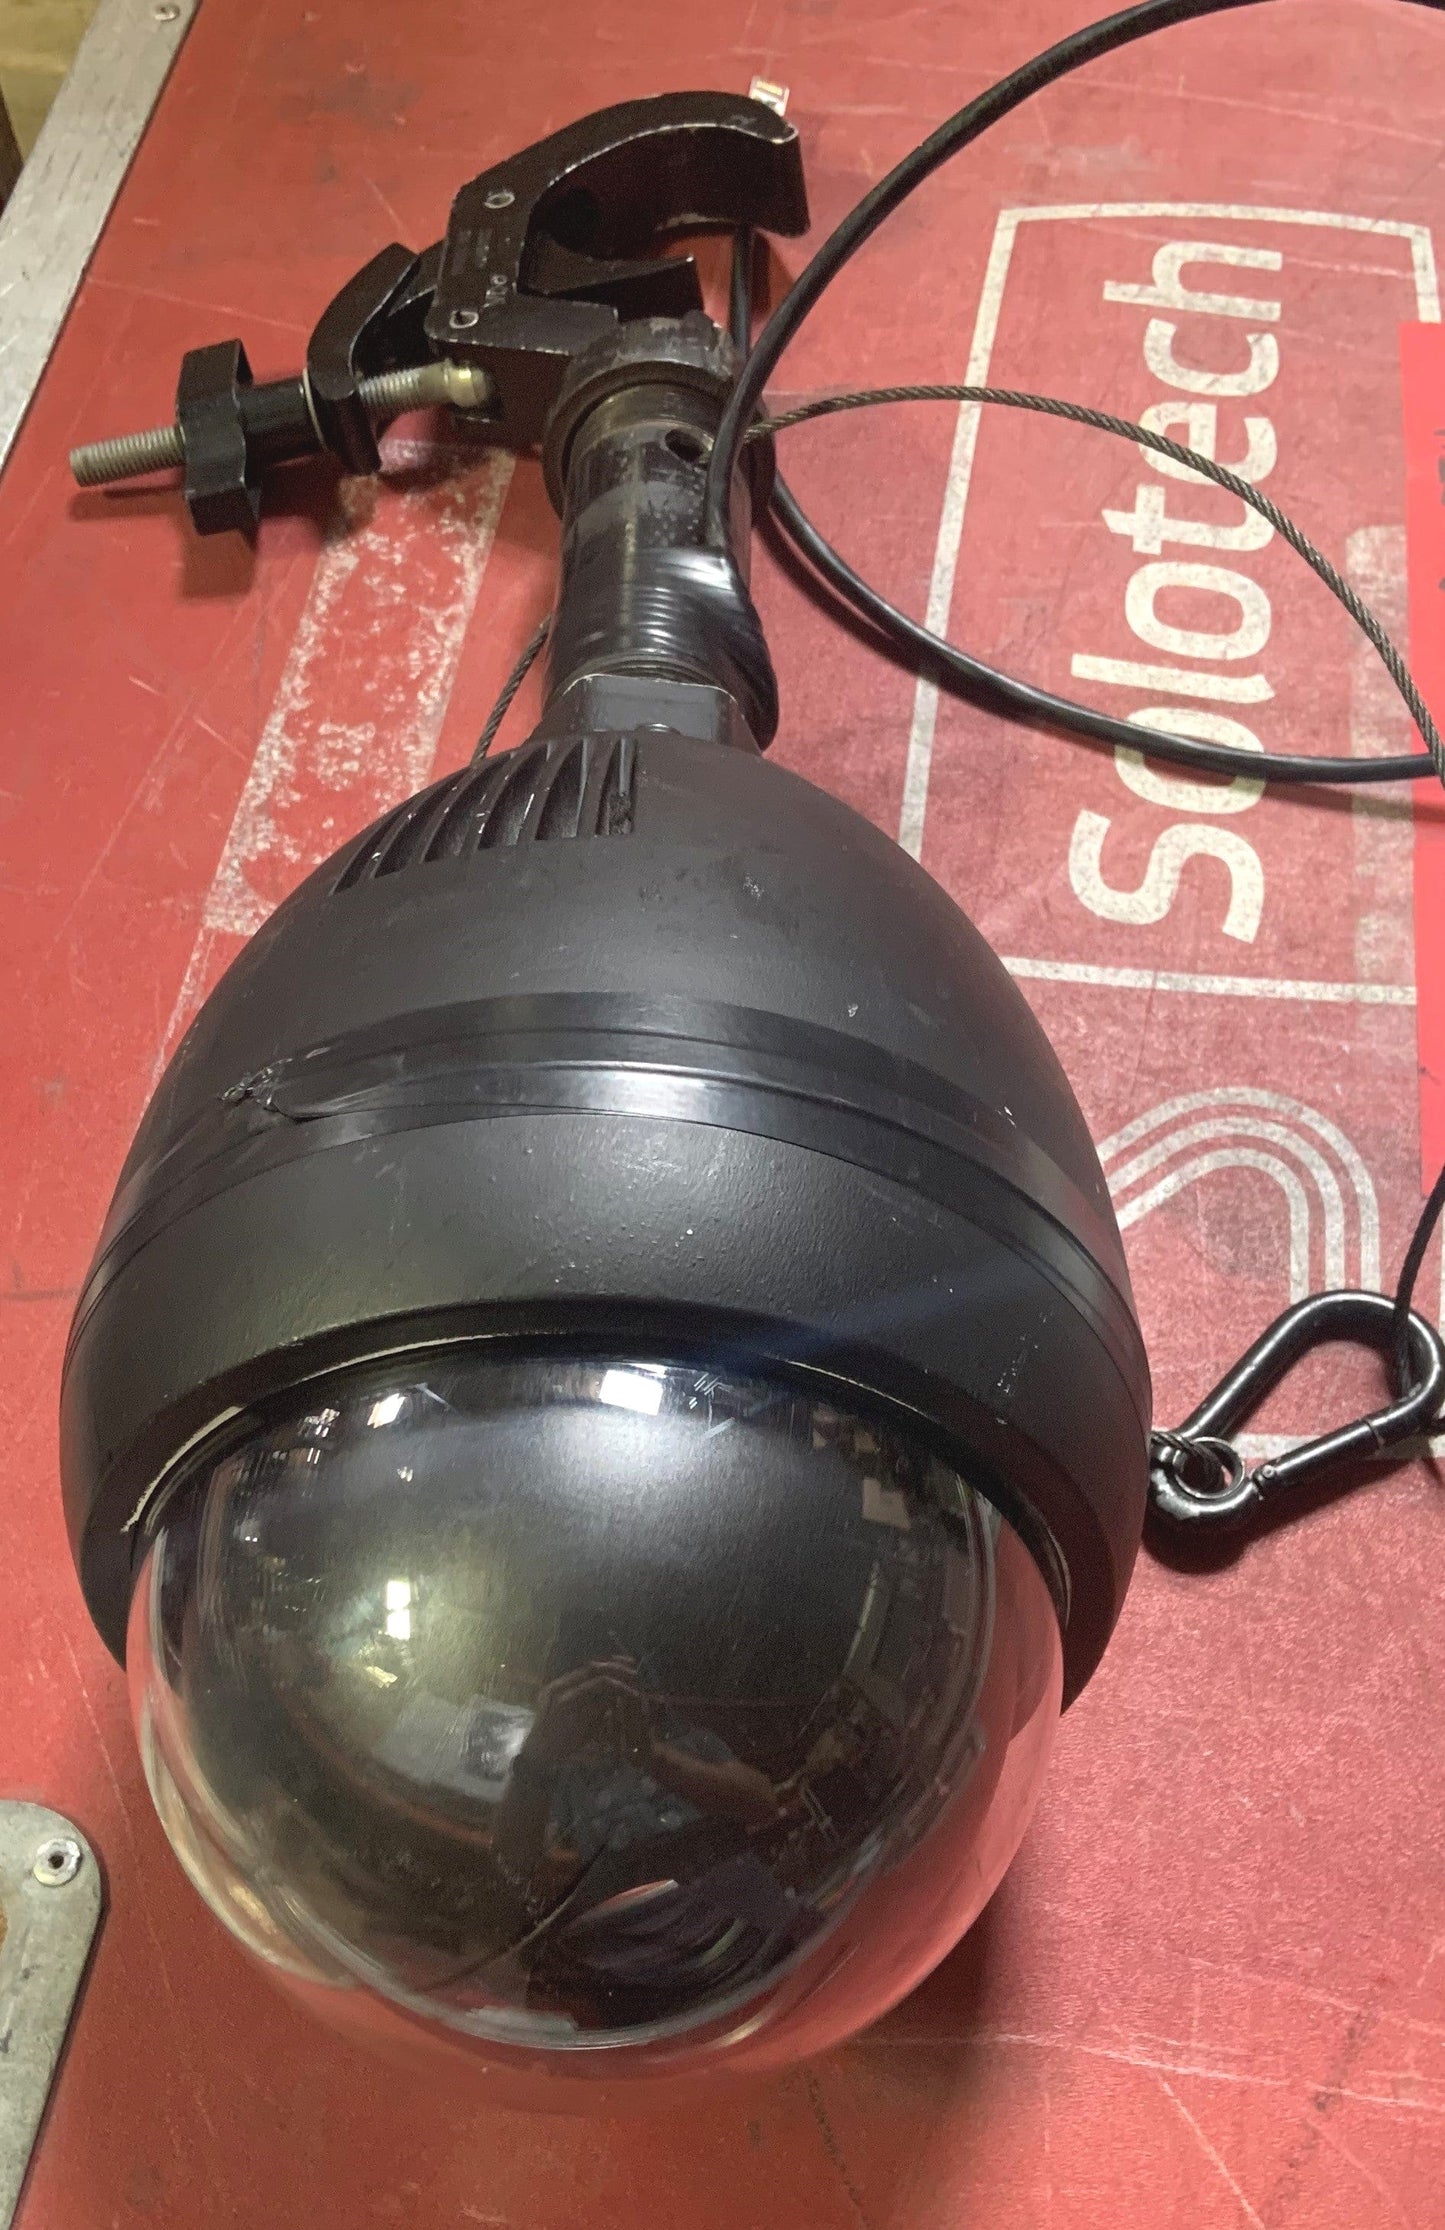 Bosch VG57220EPC4 Autodome Surveillance Camera - PSSL ProSound and Stage Lighting